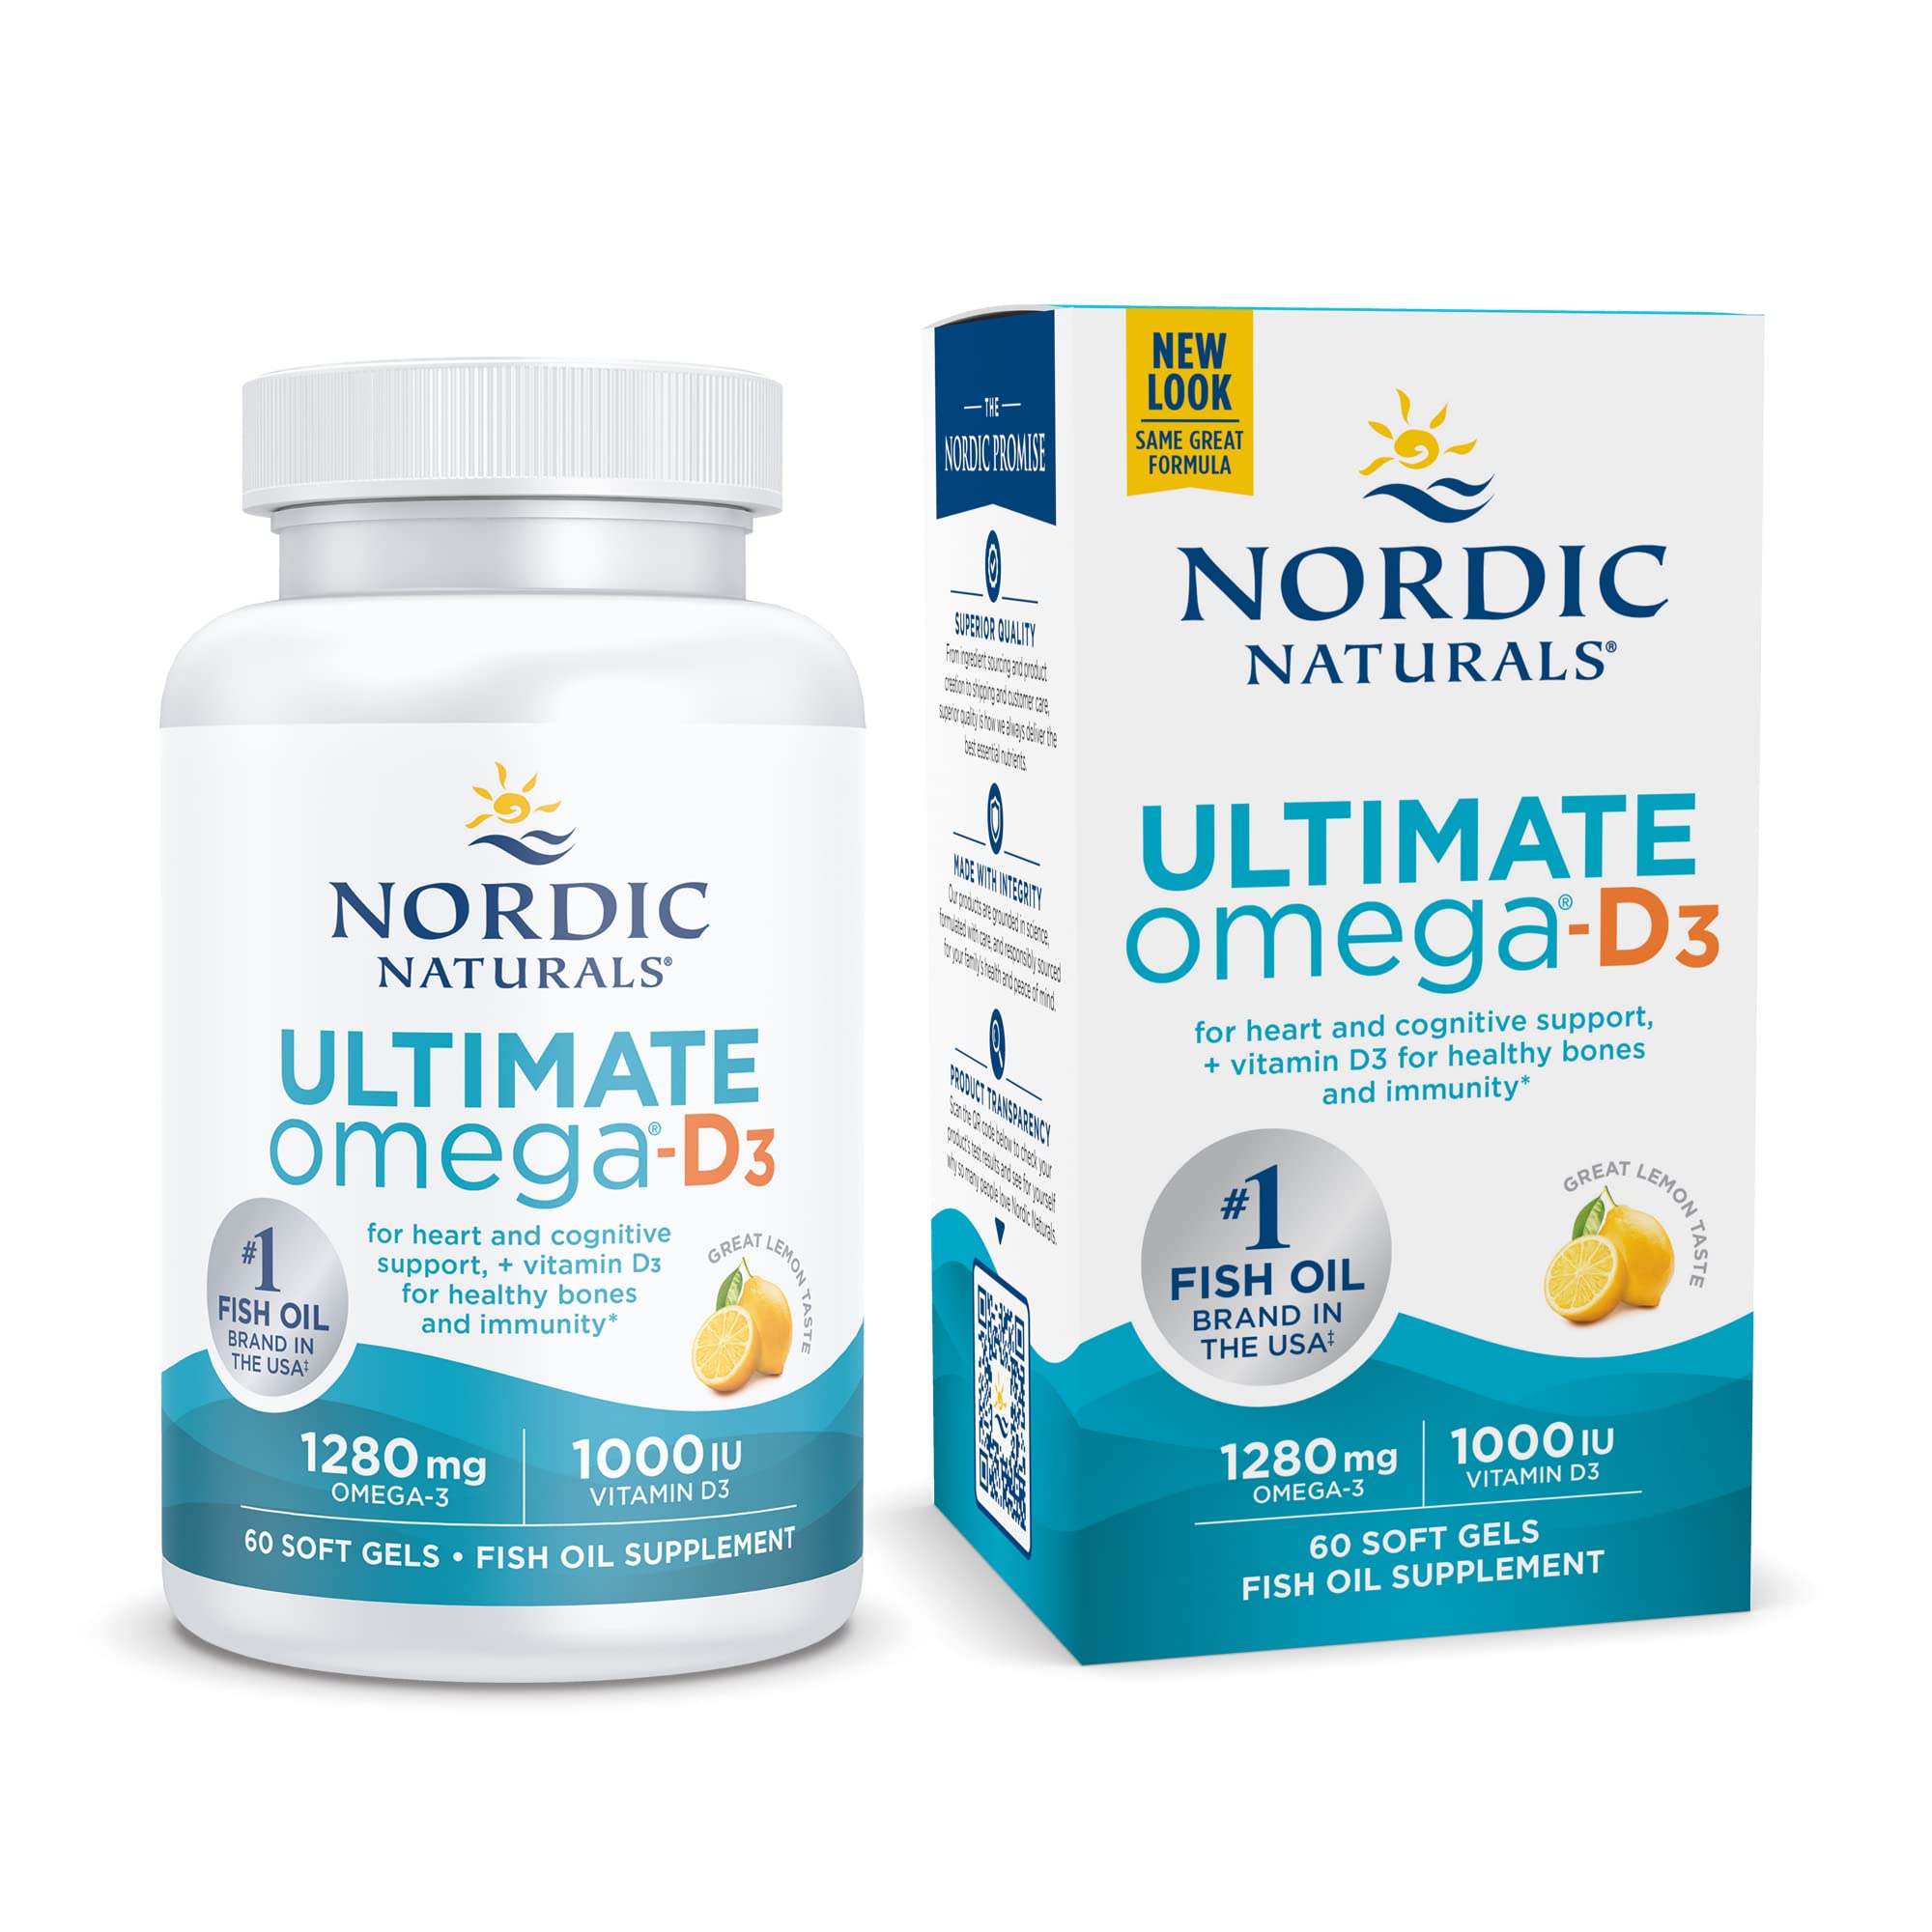 Nordic Naturals Ultimate Omega-D3, Lemon Flavor - 1280 mg Omega-3 + 1000 IU Vitamin D3 - 60 Soft Gels - Omega-3 Fish Oil - EPA & DHA - Promotes Brain, Heart, Joint, & Immune Health - 30 Servings